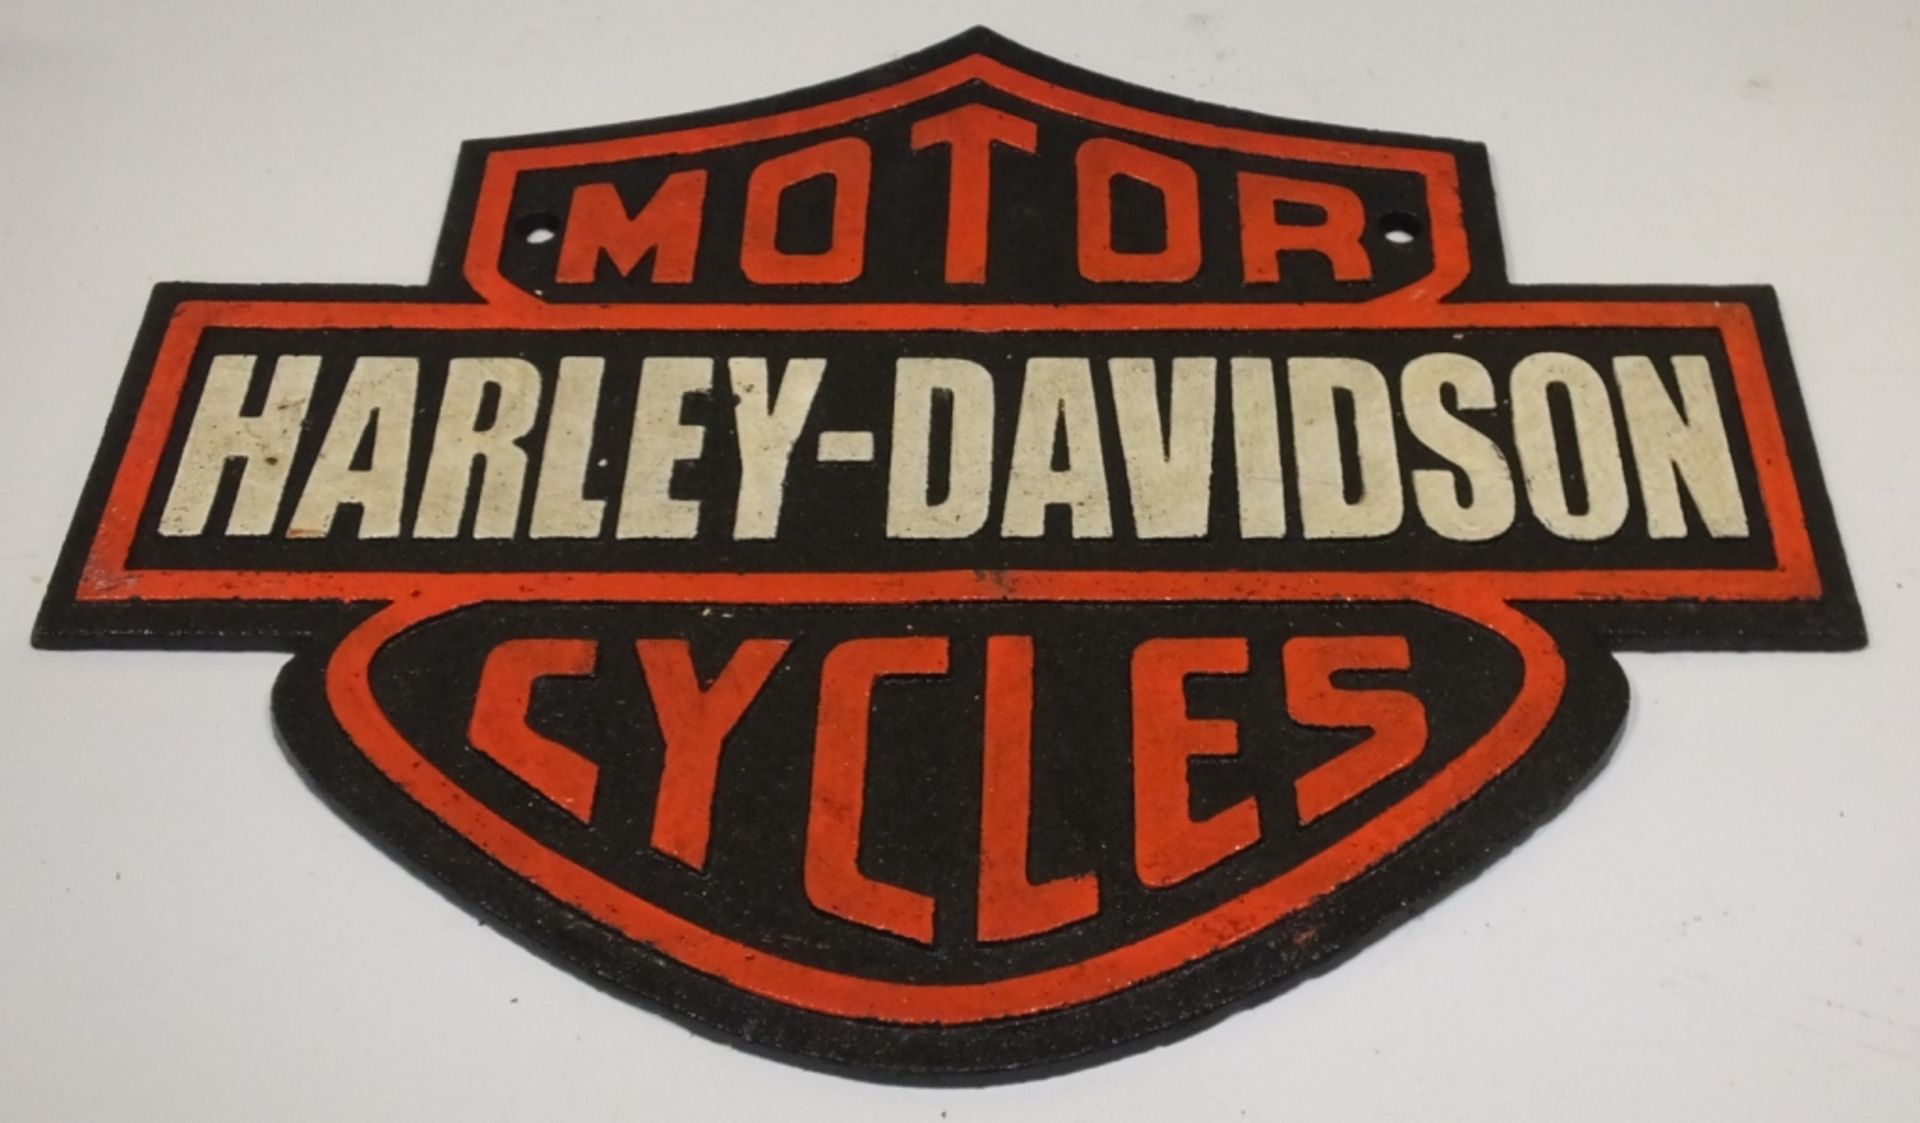 Cast Motorcycle sign - Harley Davidson